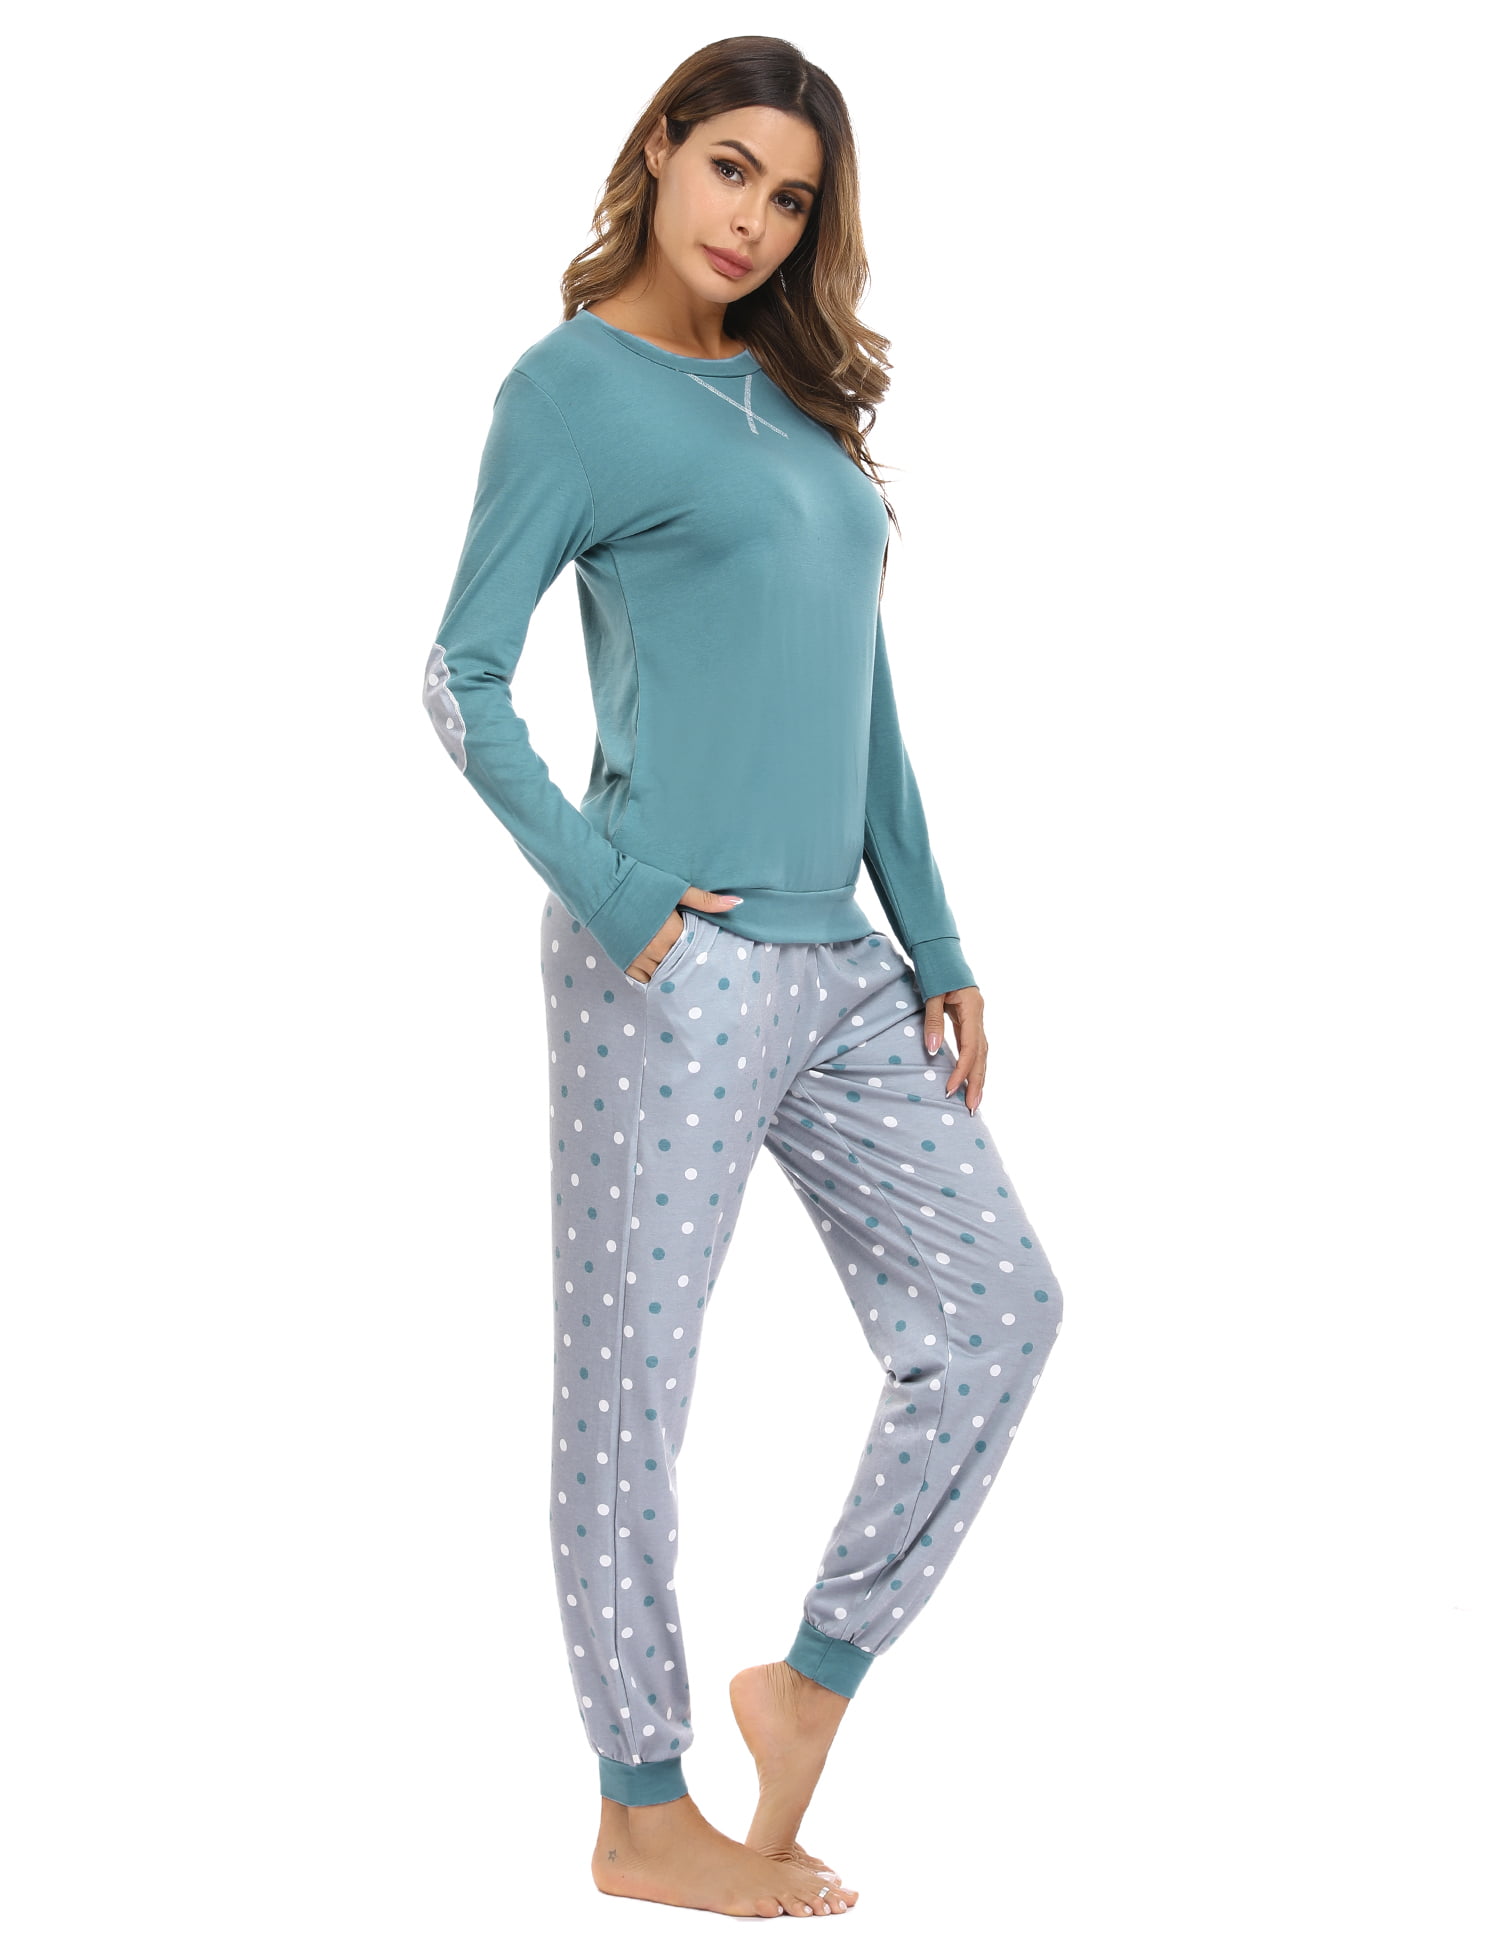 iClosam Mens Pyjama Set Cotton Loungewear Long Sleeve Top & Check Bottoms PJ Pajamas Set Classic Sleepwear Nightwear S-XXL 